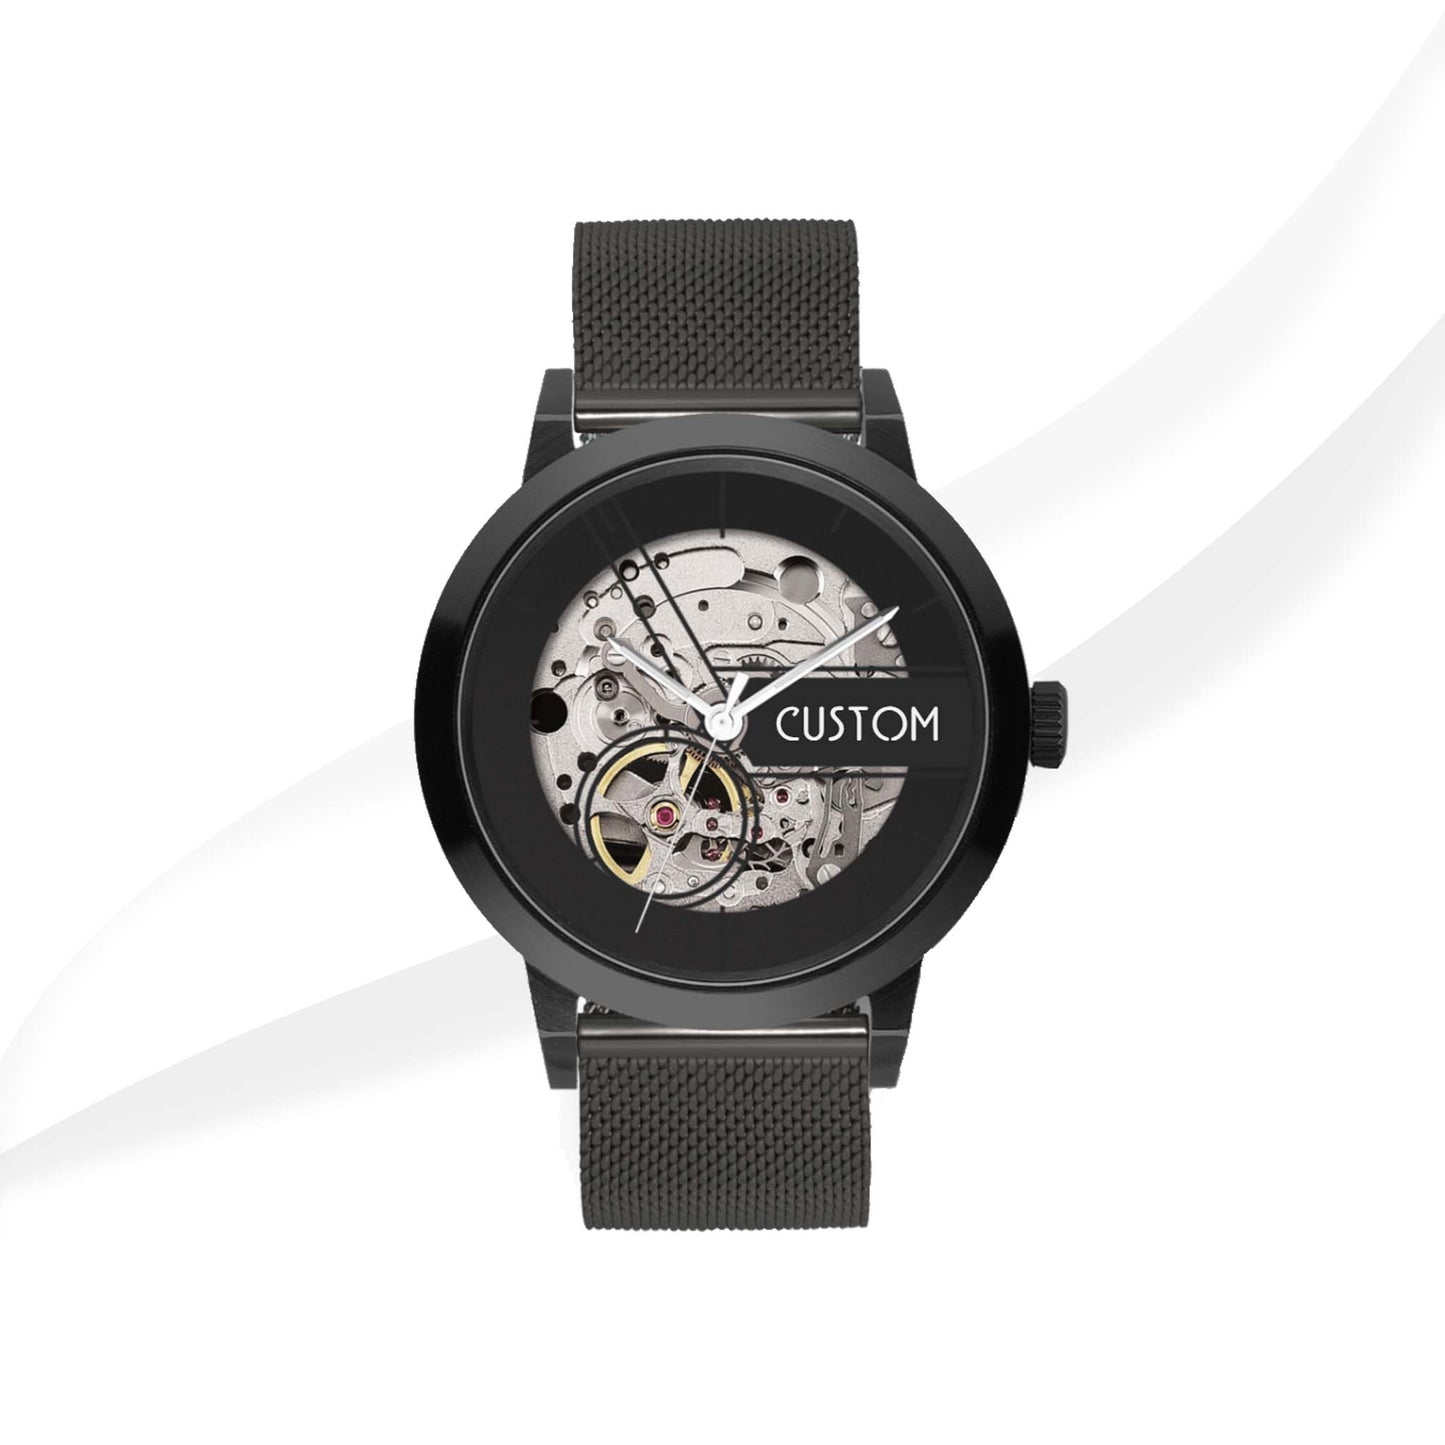 EONIQ custom skeleton watch - all black 